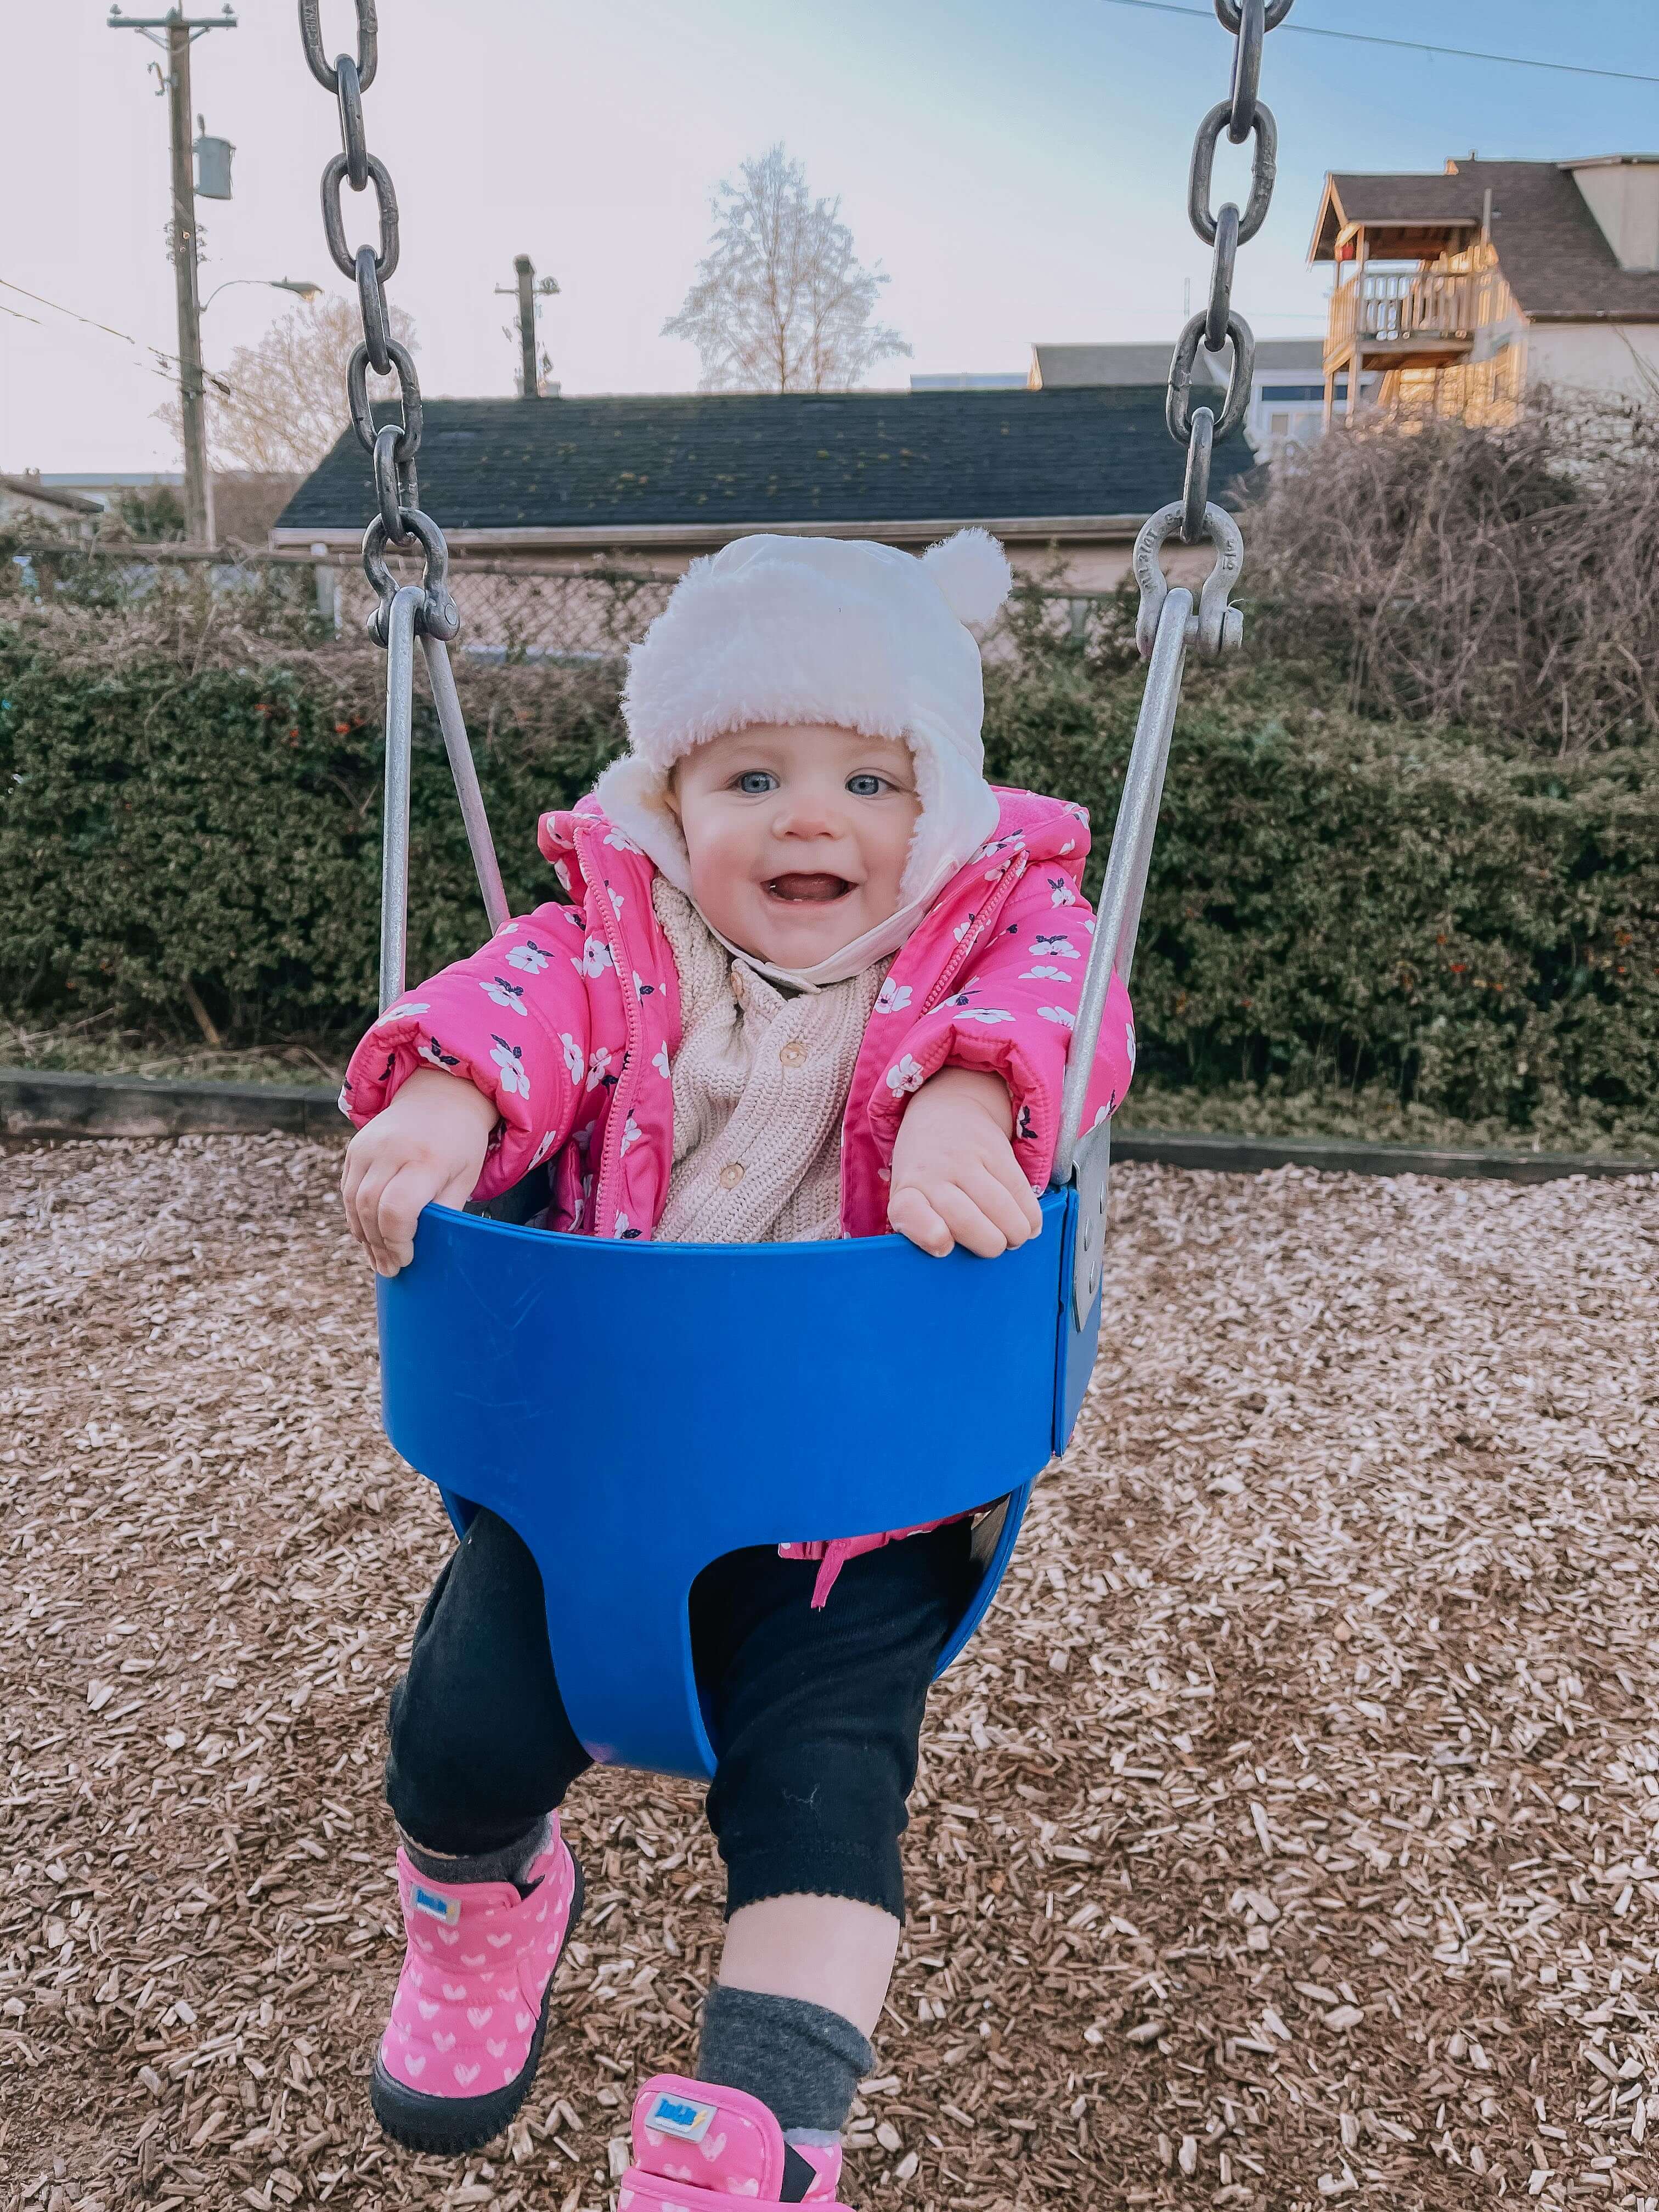 Baby on playground swing